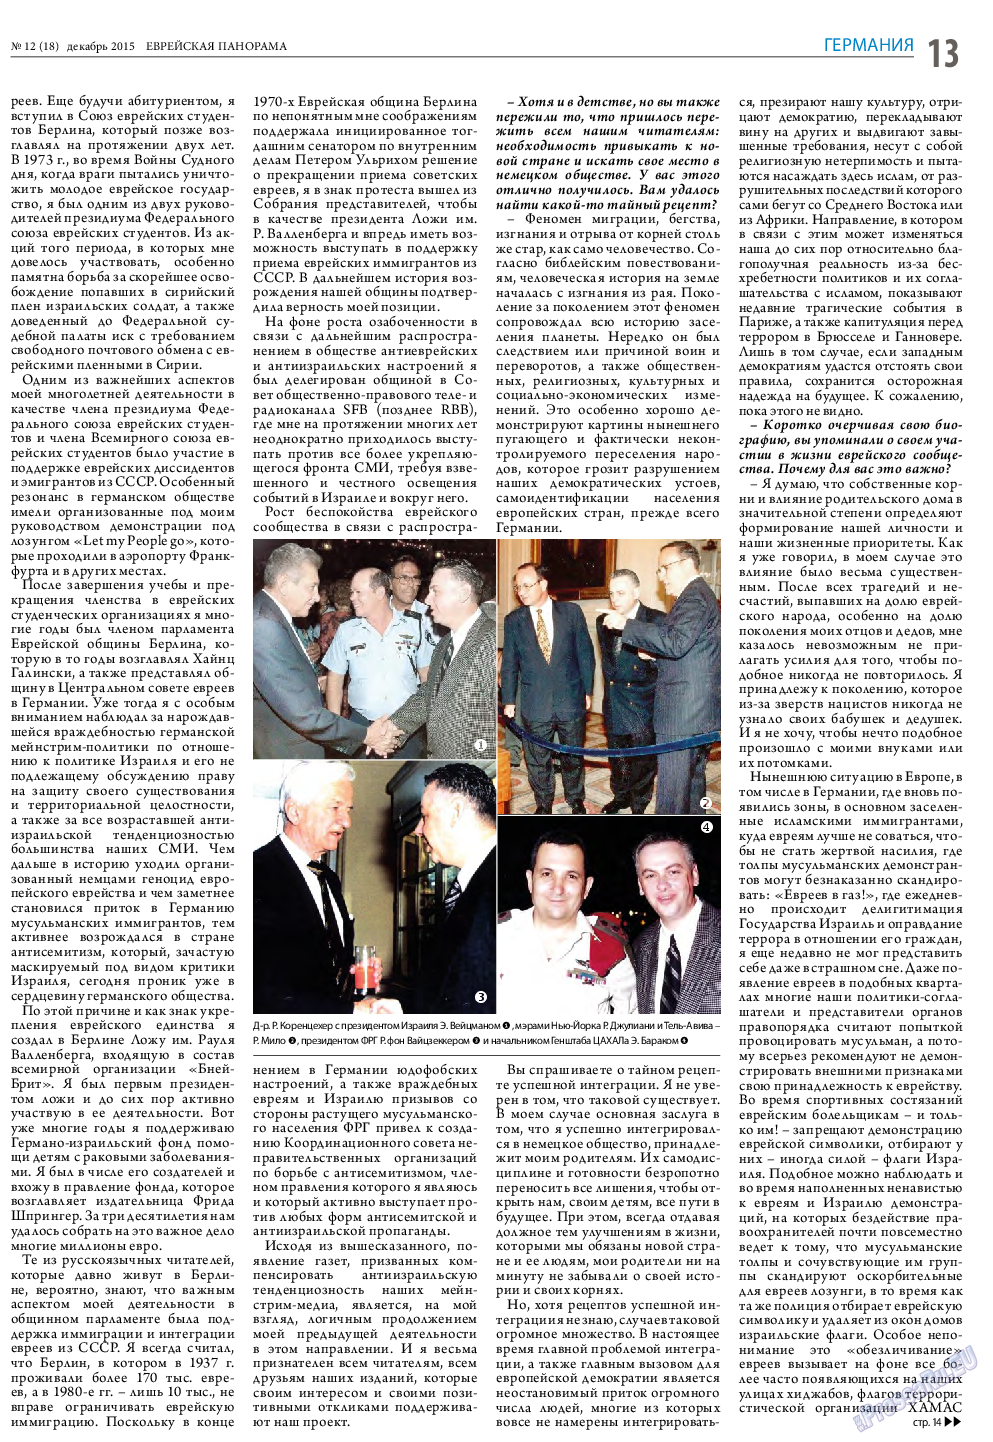 Еврейская панорама, газета. 2015 №12 стр.13